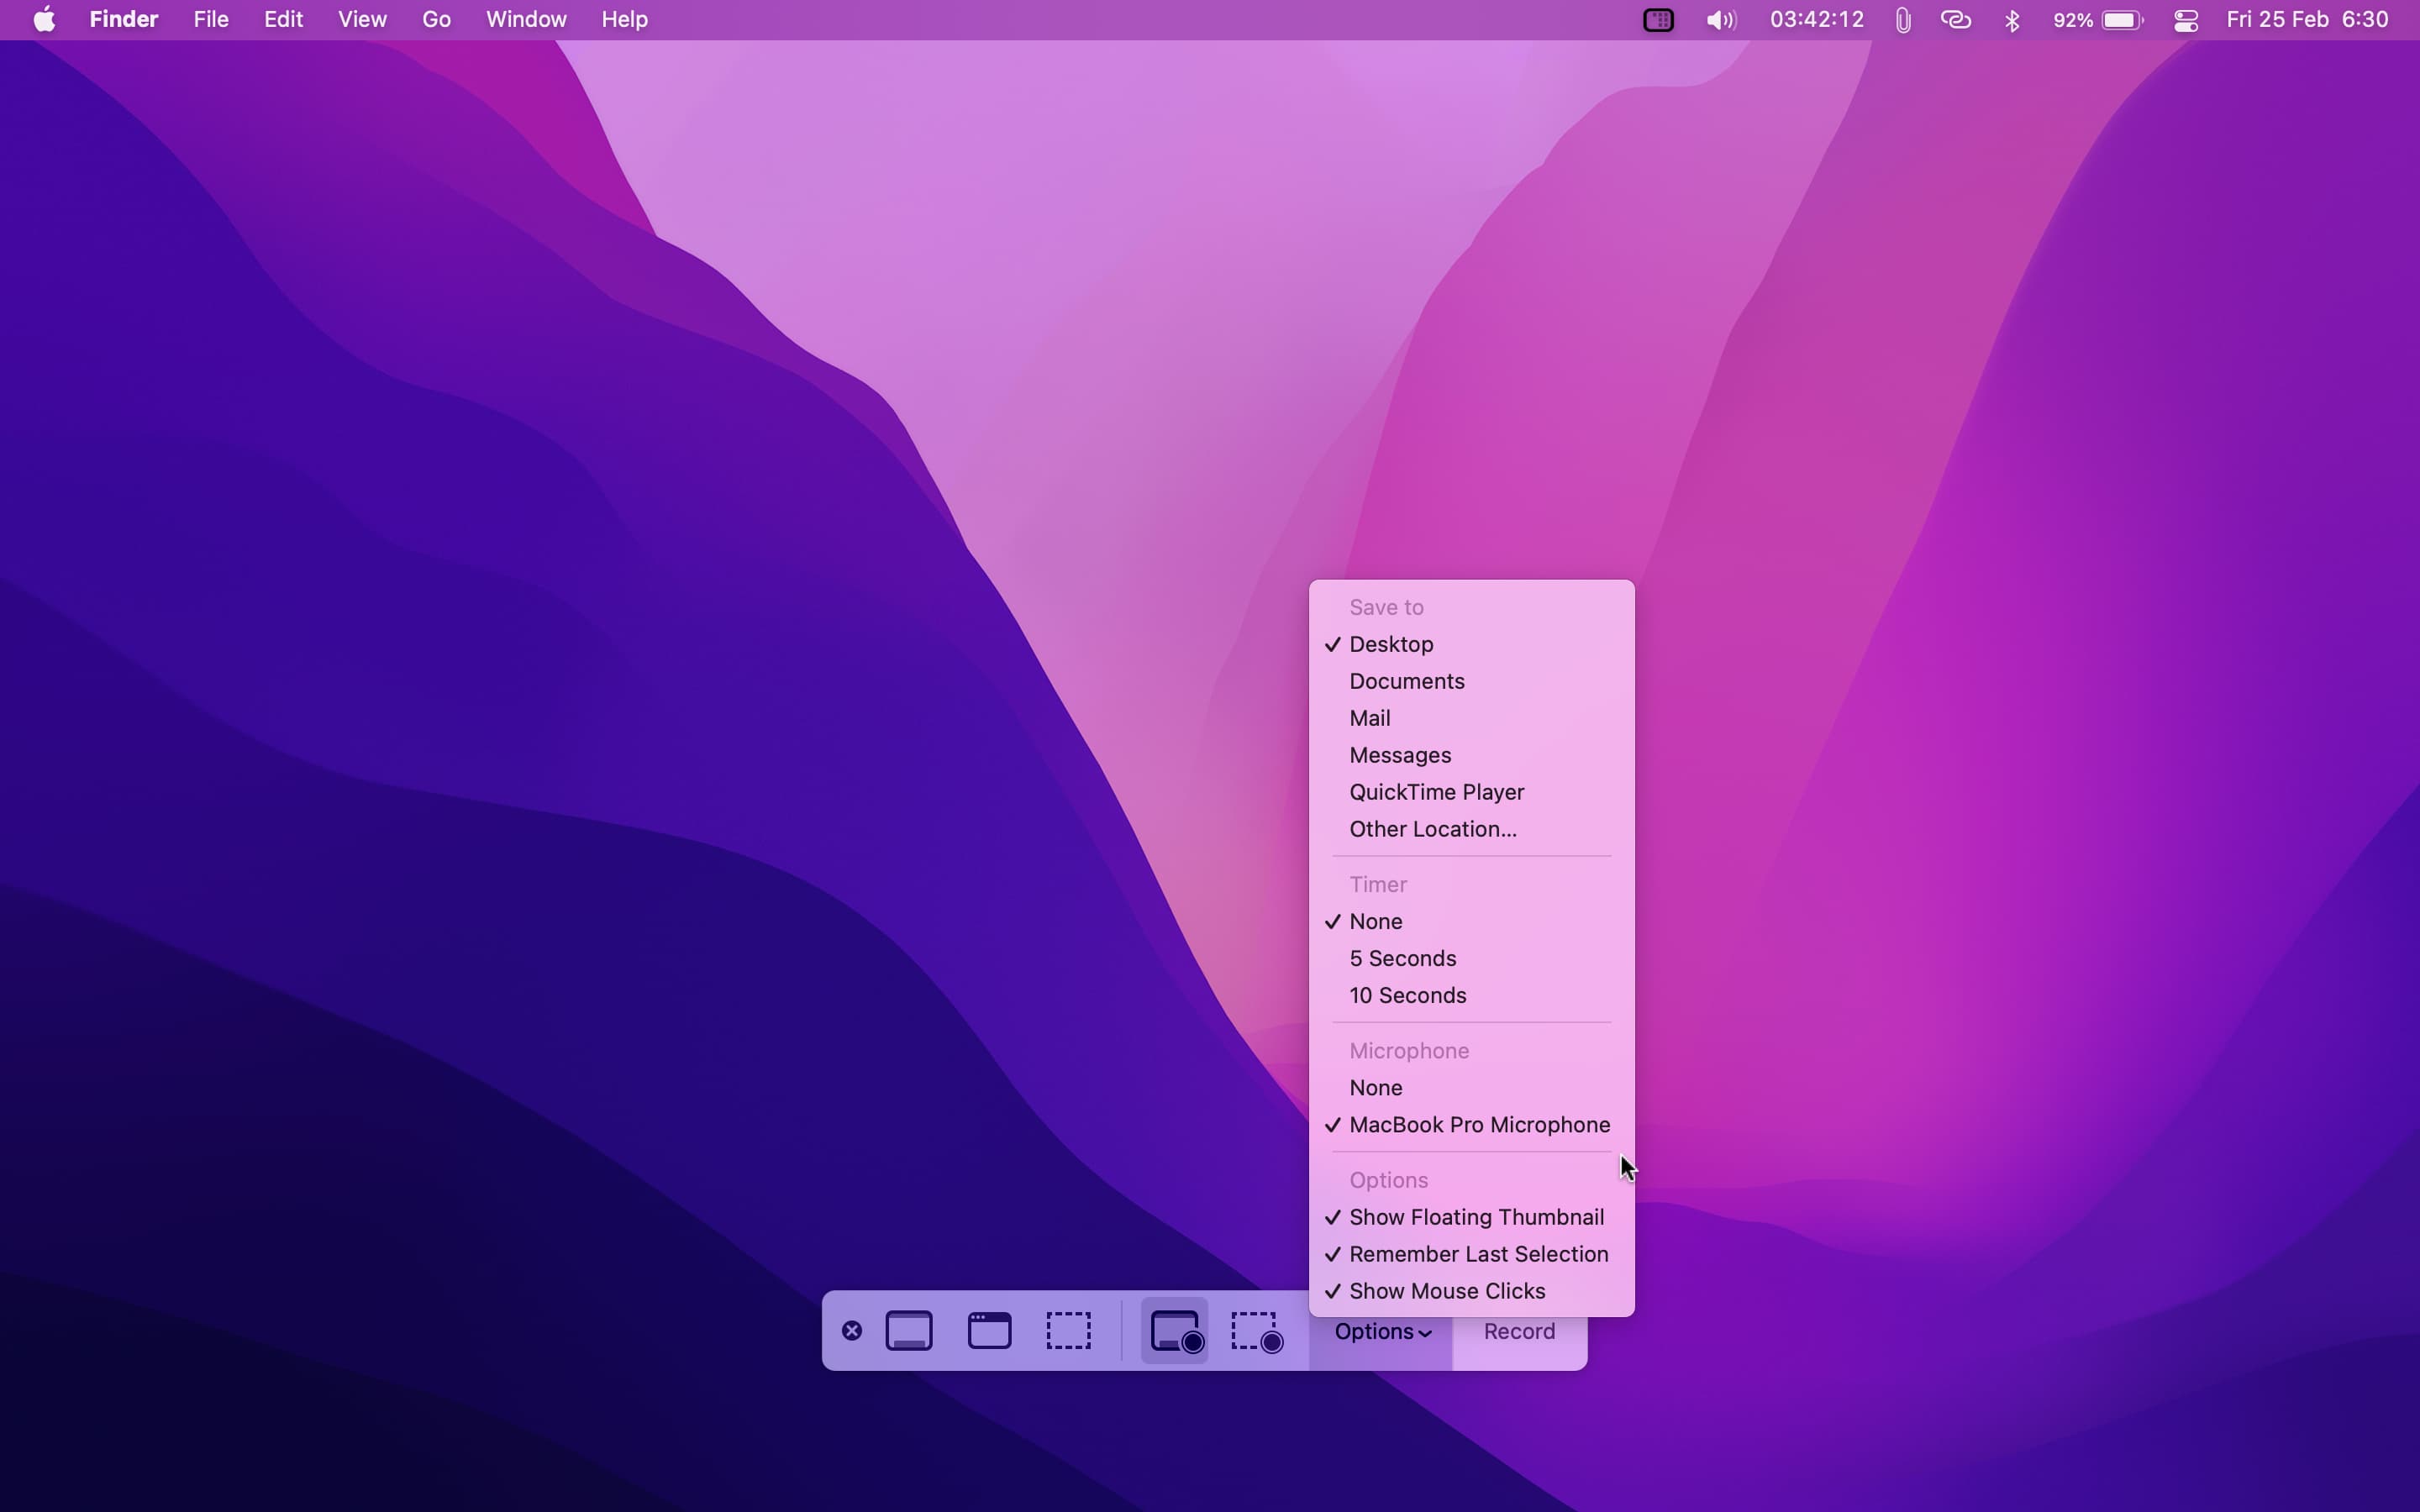 Screen Recording options on Mac